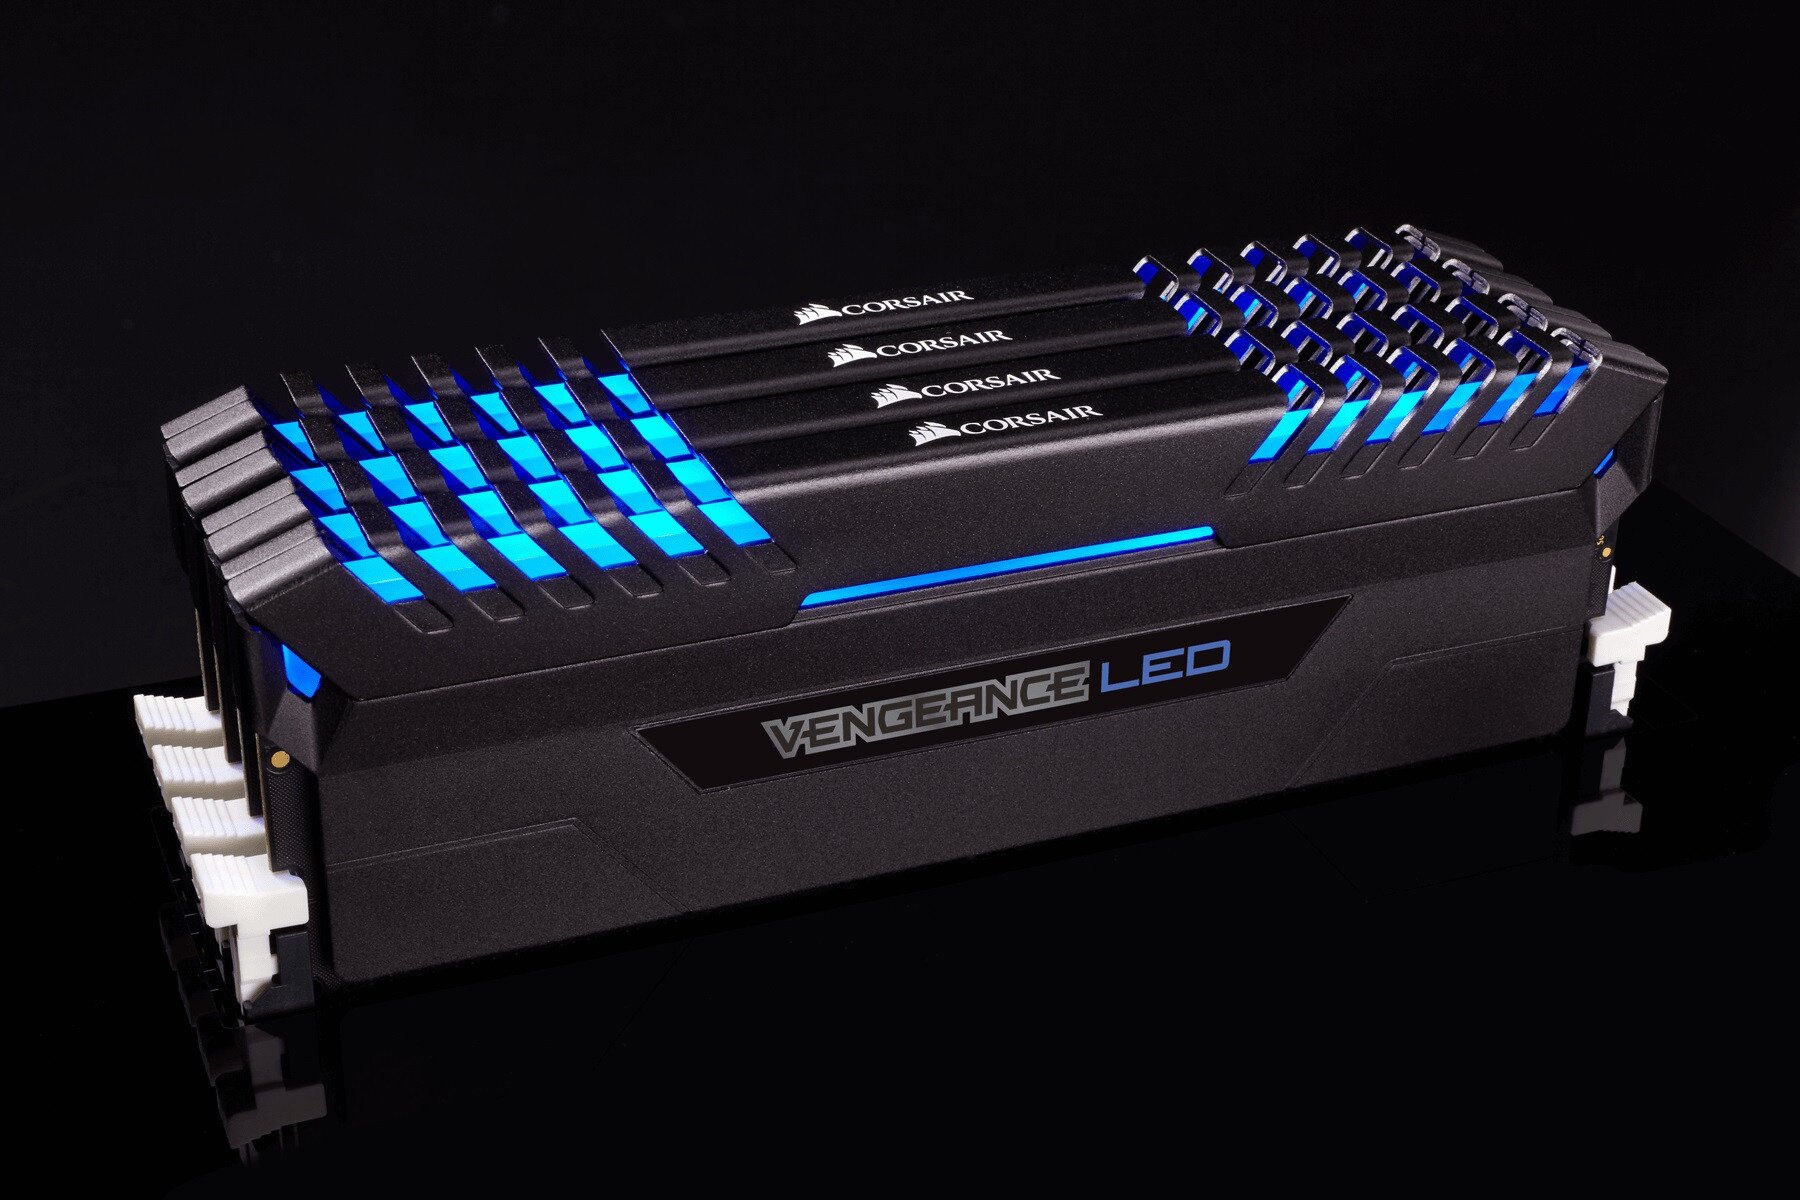 Corsair Vengeance LED - 32GB (4 x 8GB) DDR4 DRAM - 2666MHz C16 Memory Kit -  Blue LED